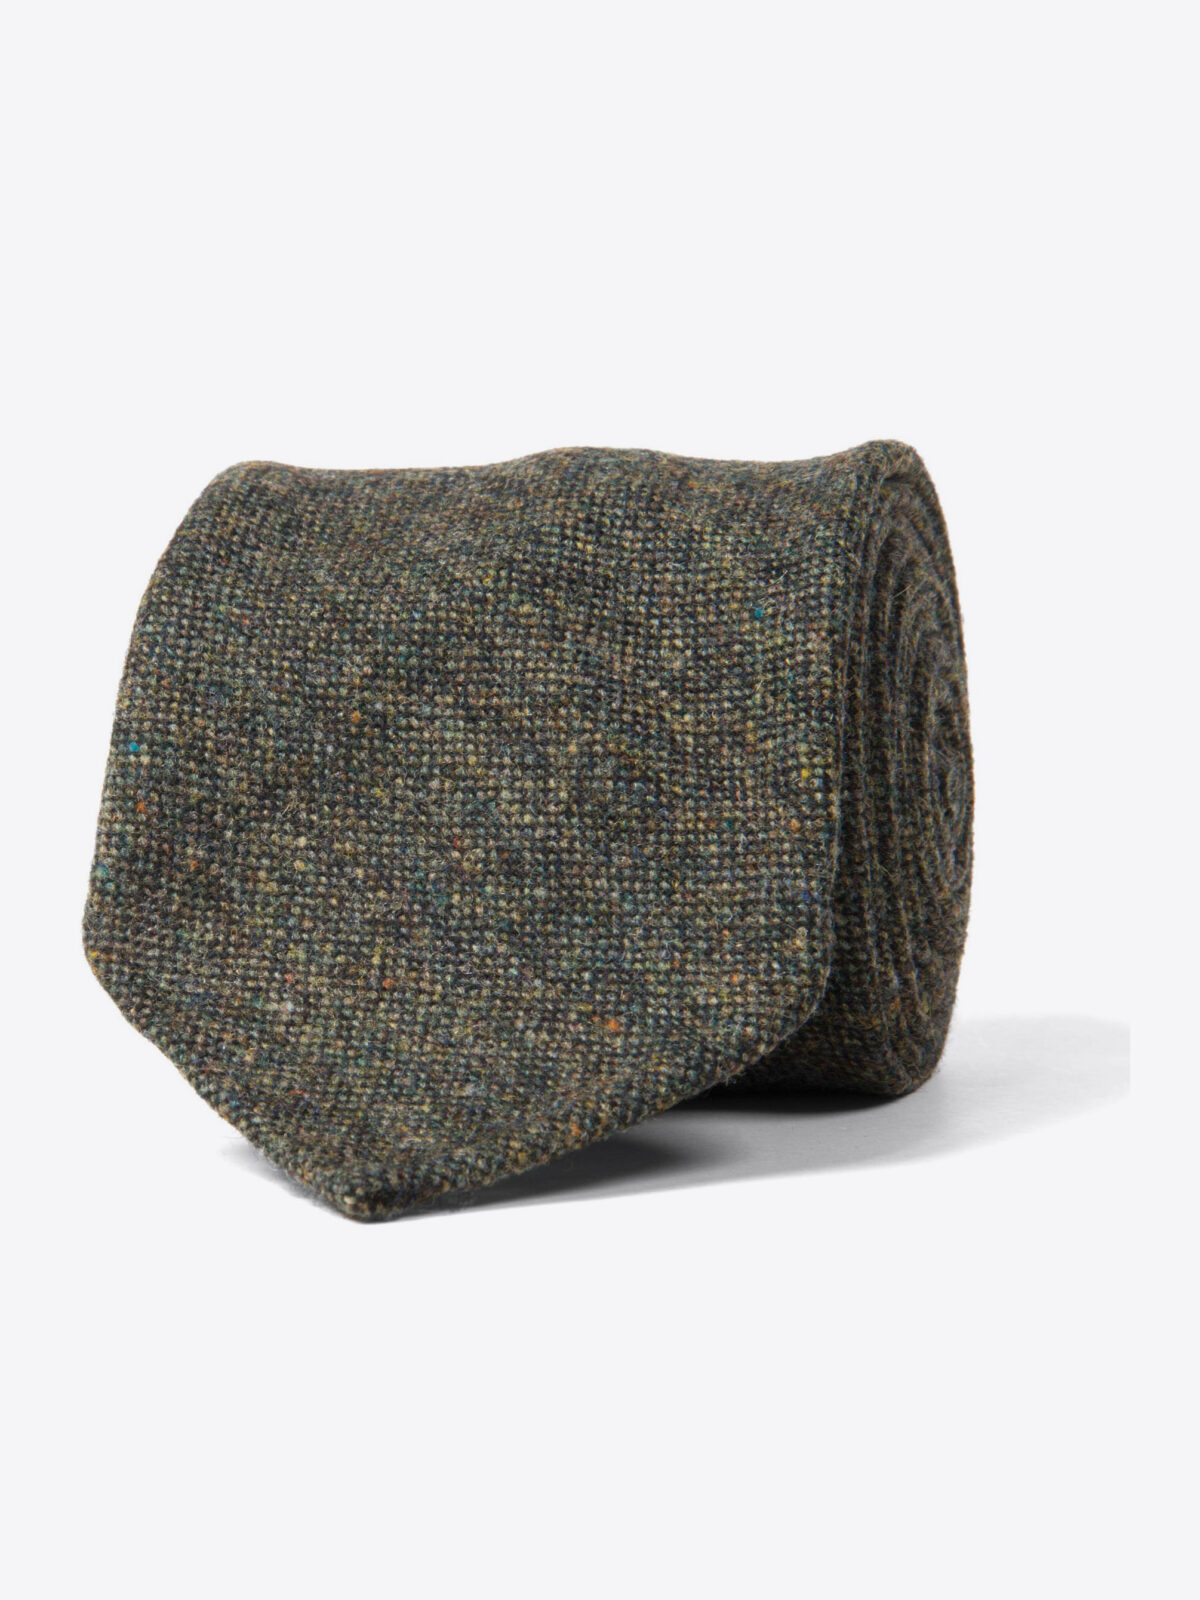 Piedmont Pine Donegal Wool Tie